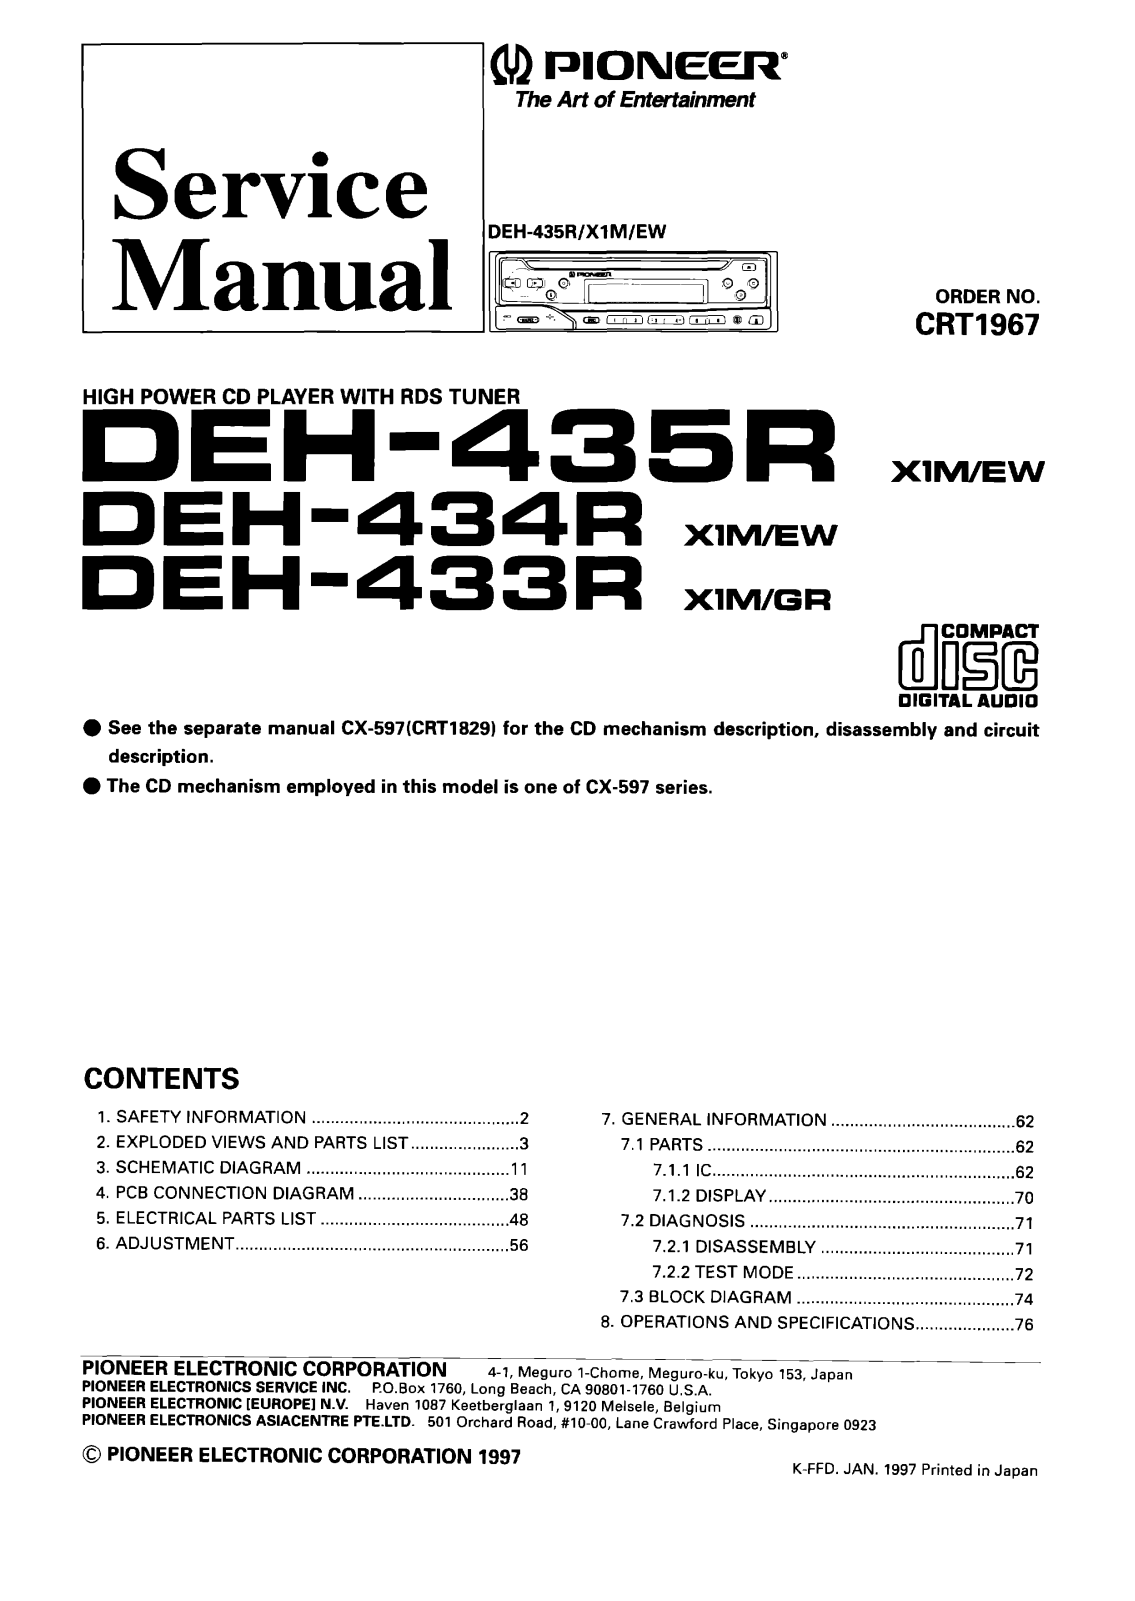 Pioneer DEH-433-R, DEH-434-R, DEH-435-R Service manual